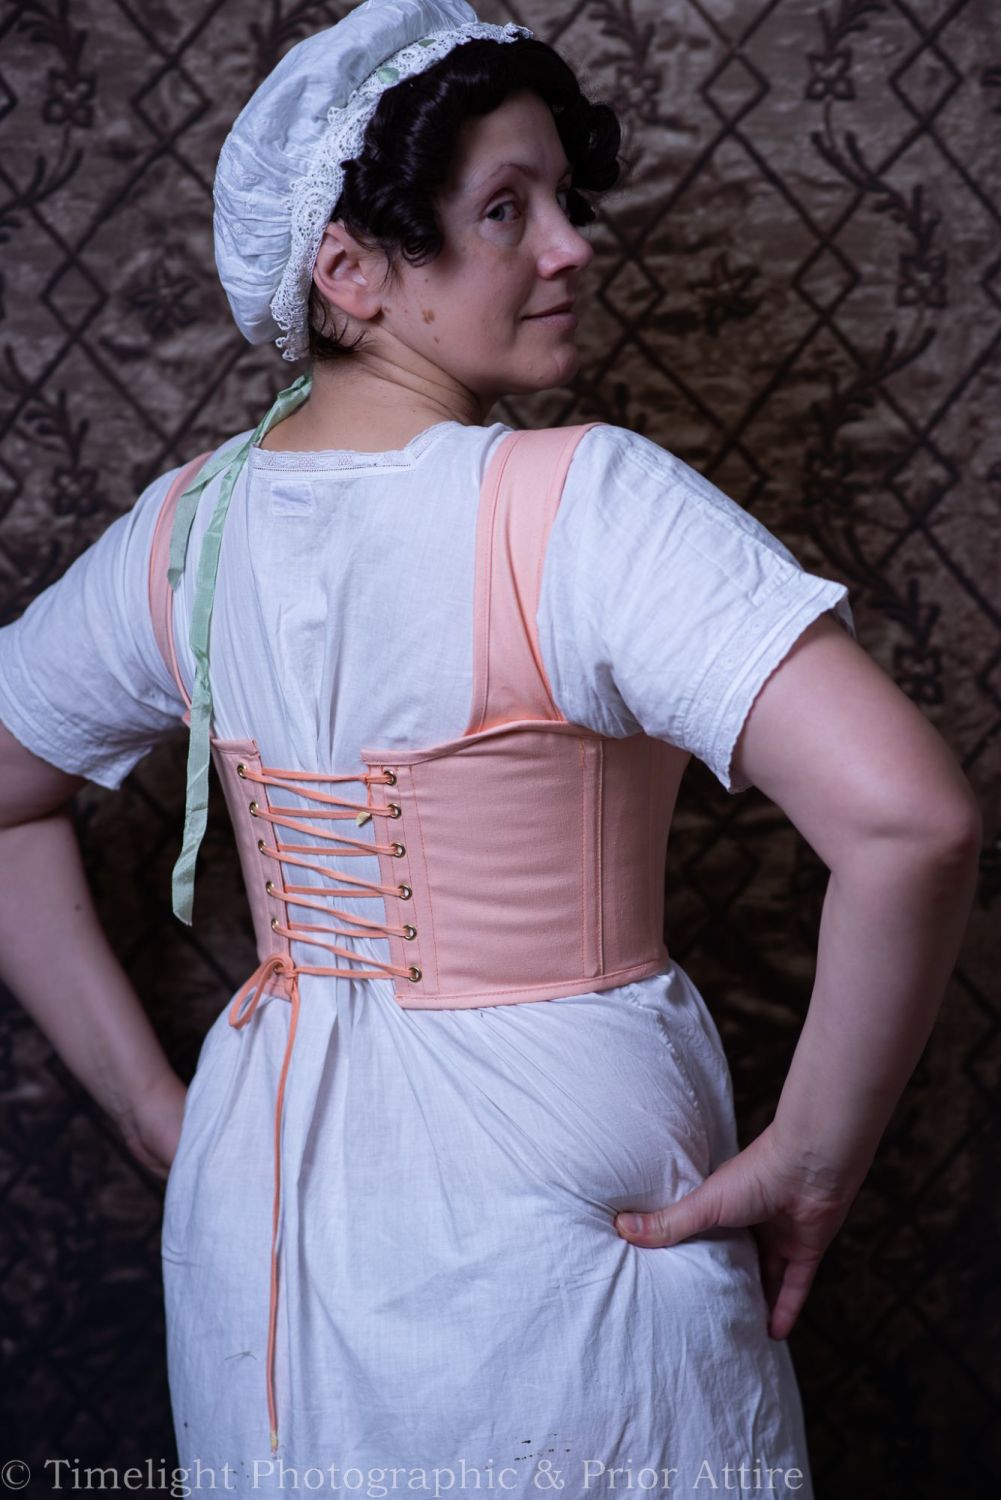 Regency short stays corset size 14-16